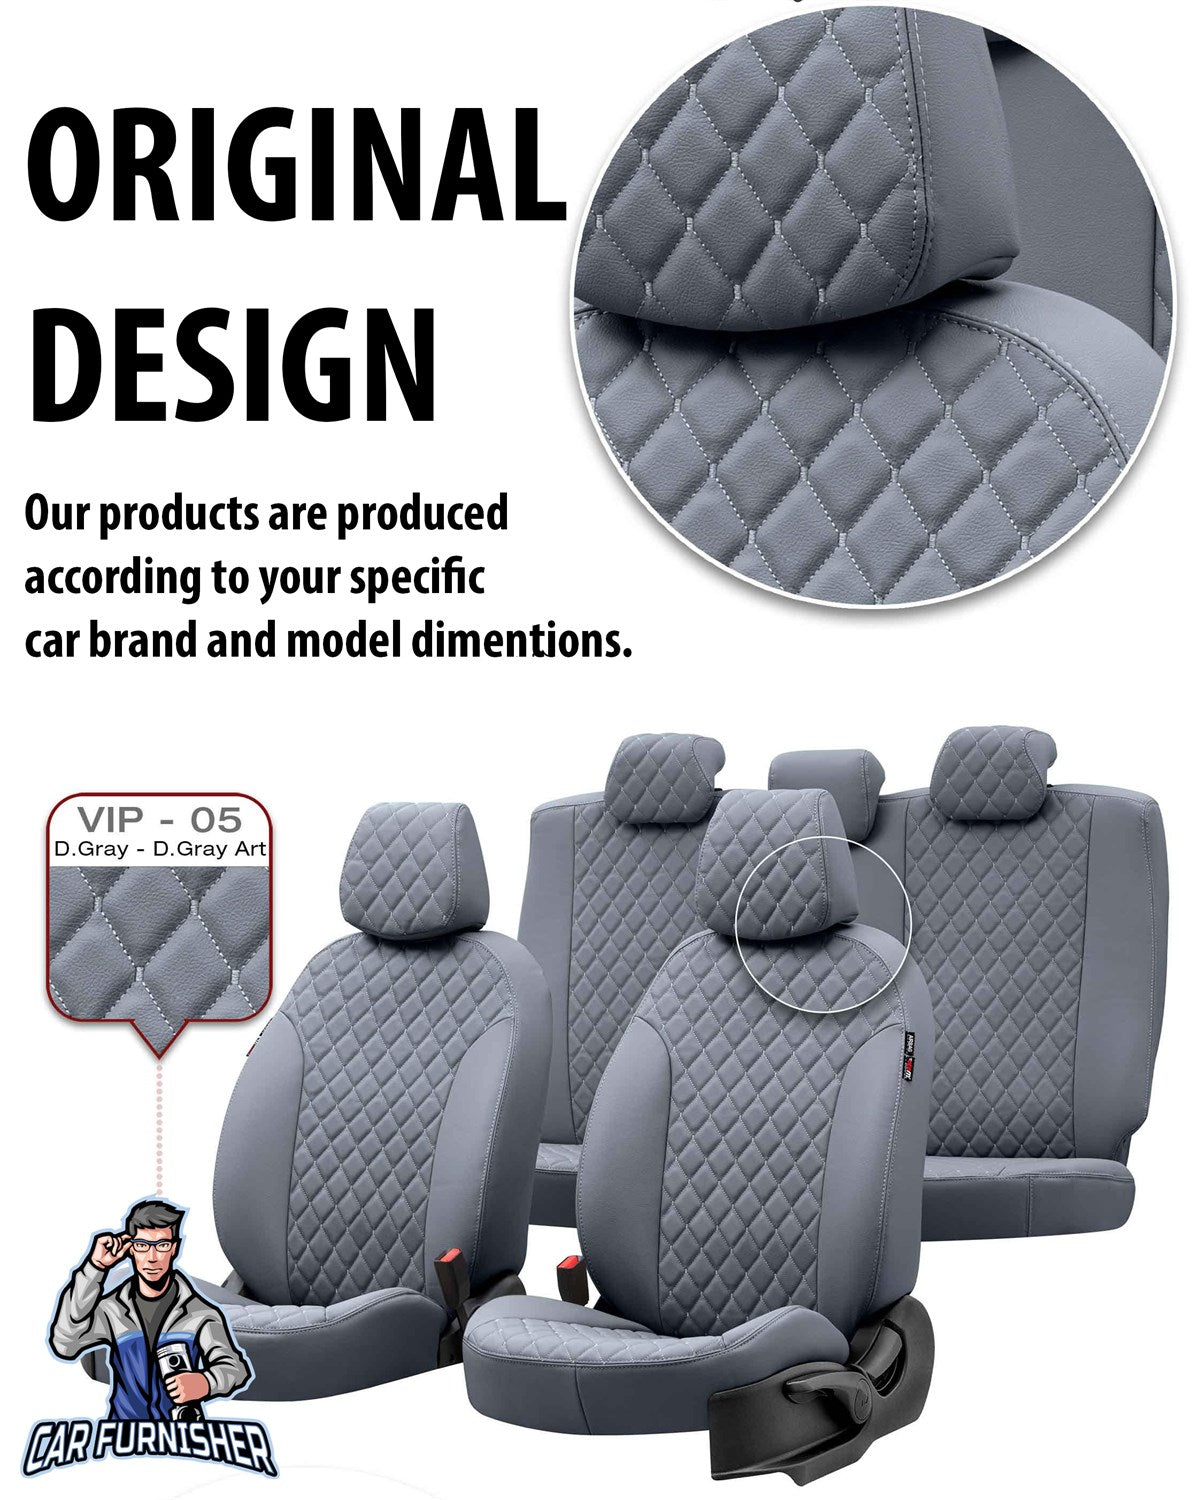 Mitsubishi ASX Seat Covers Madrid Leather Design Beige Leather